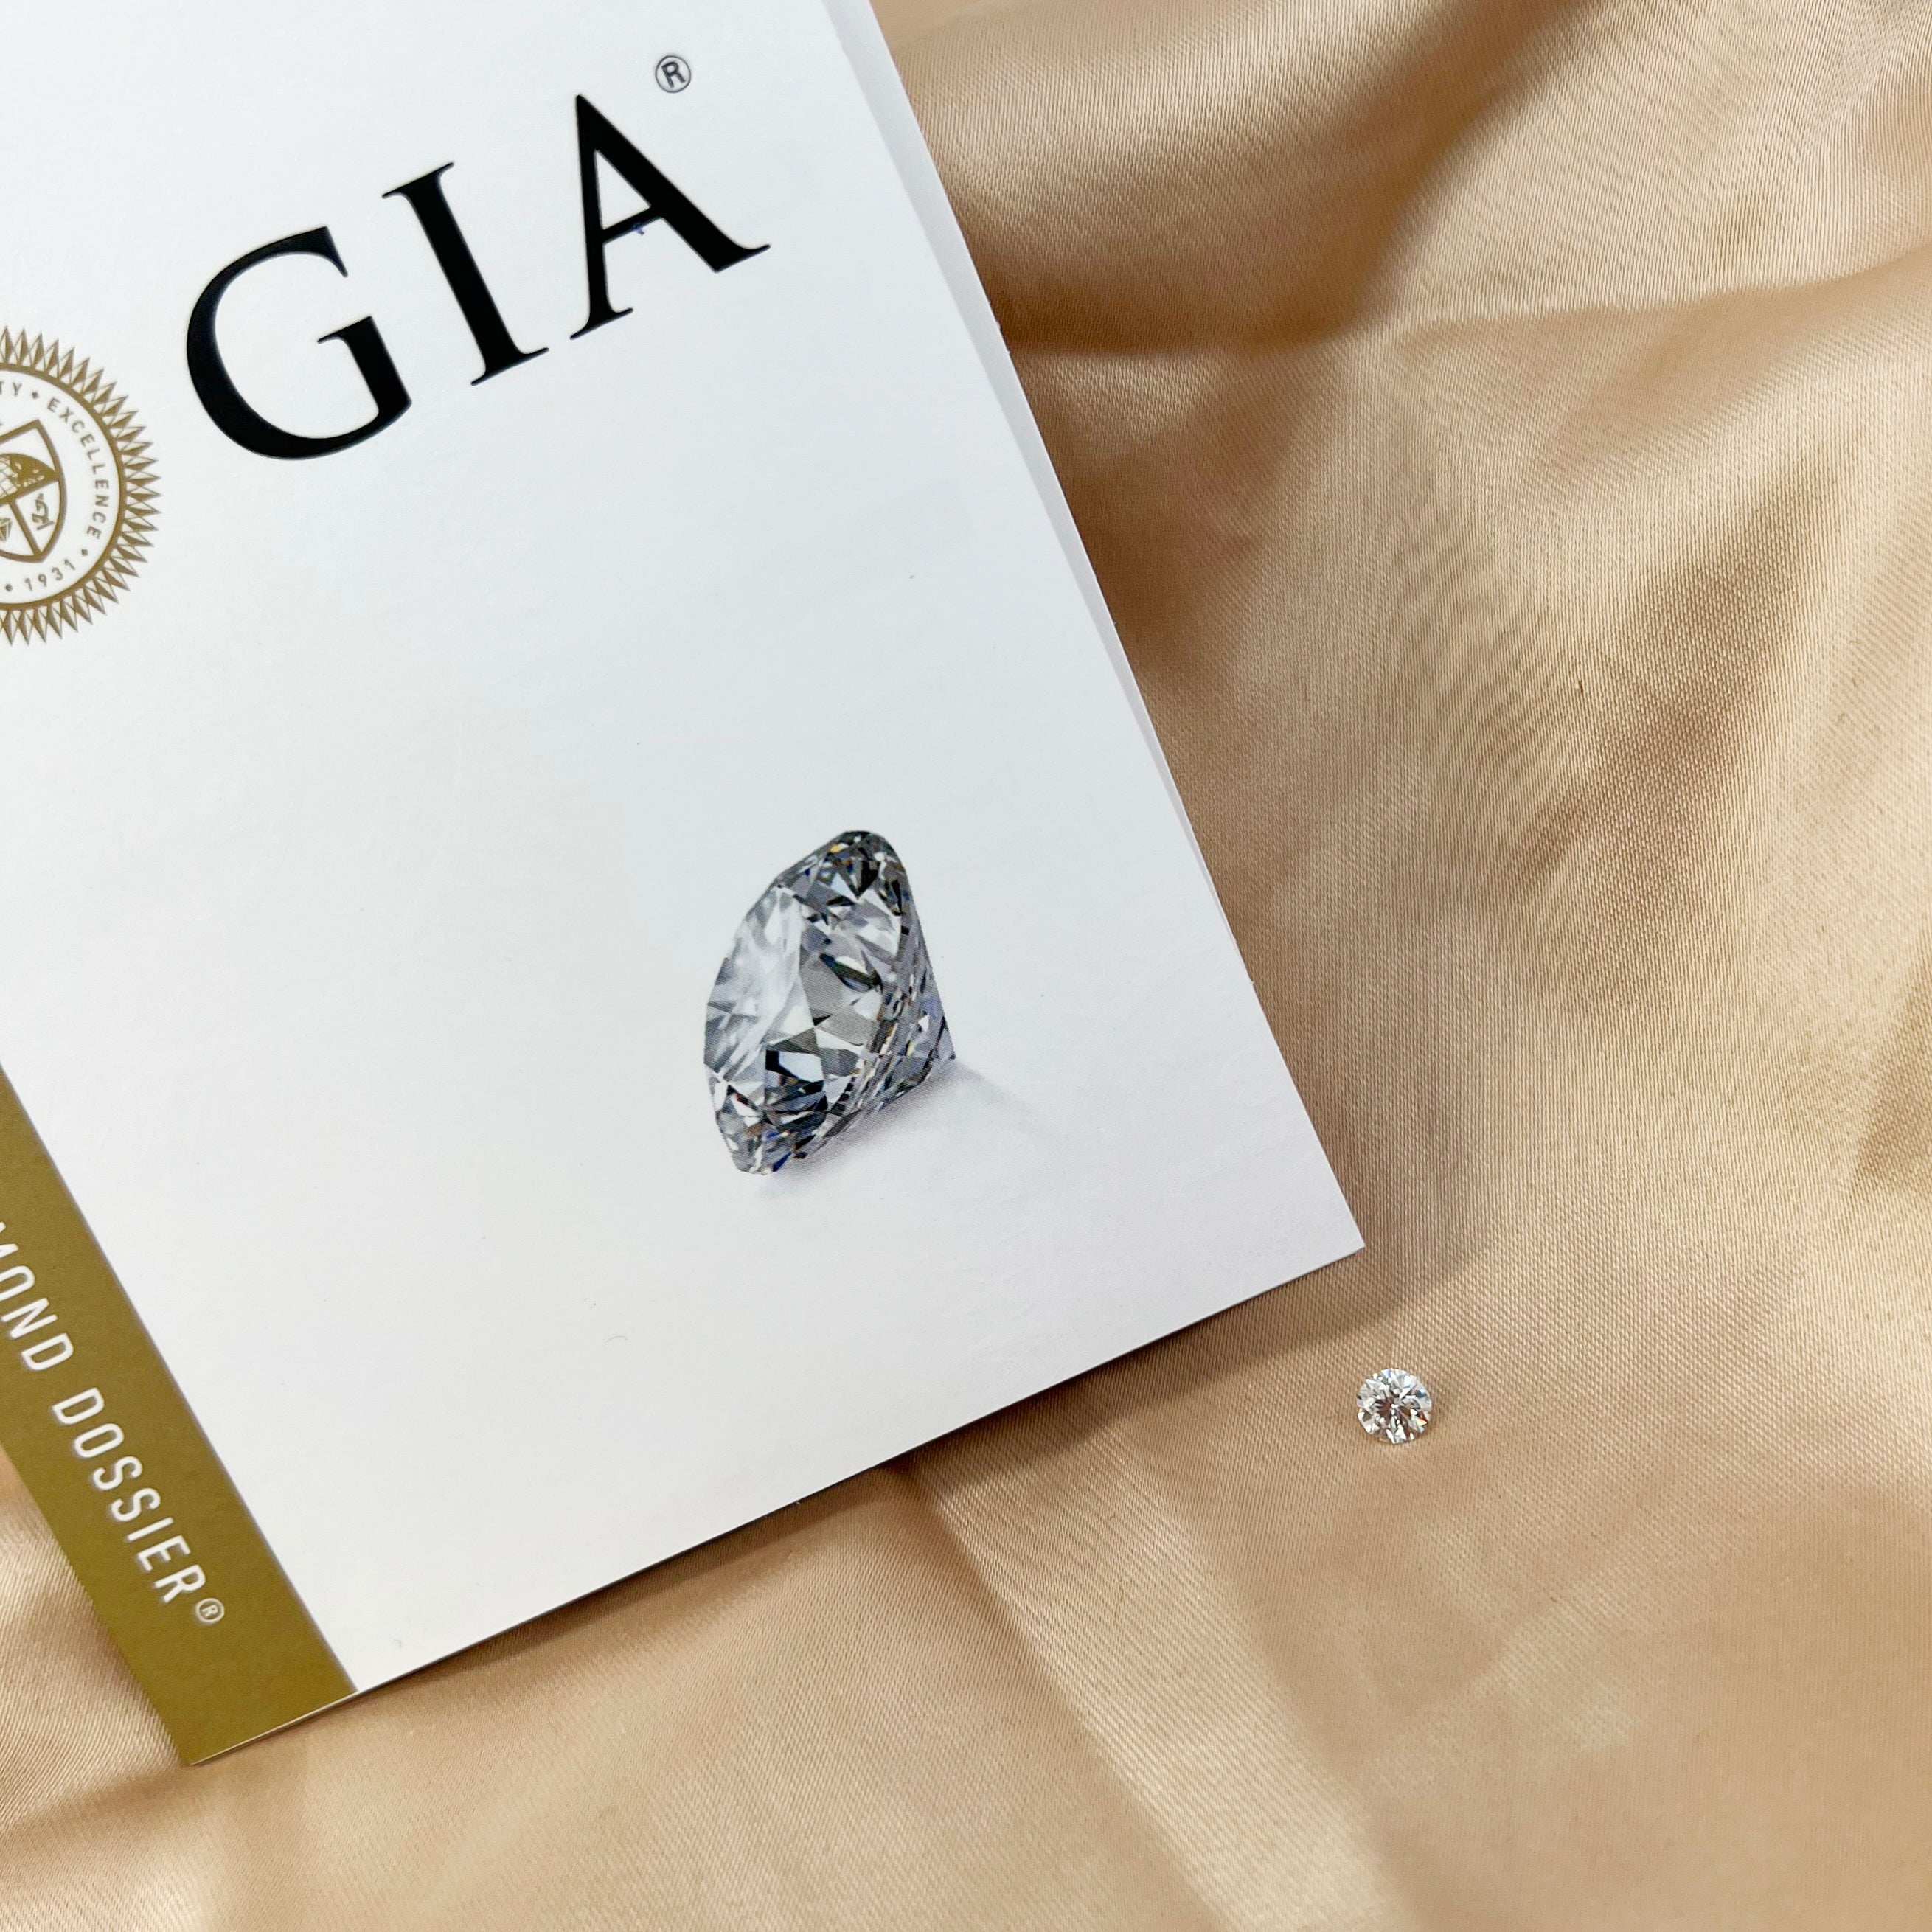 Guaranteed Authentic GIA Loose Diamond 0.5 Carat Round Natural Diamond with GIA Certification 0.50/F/VS1